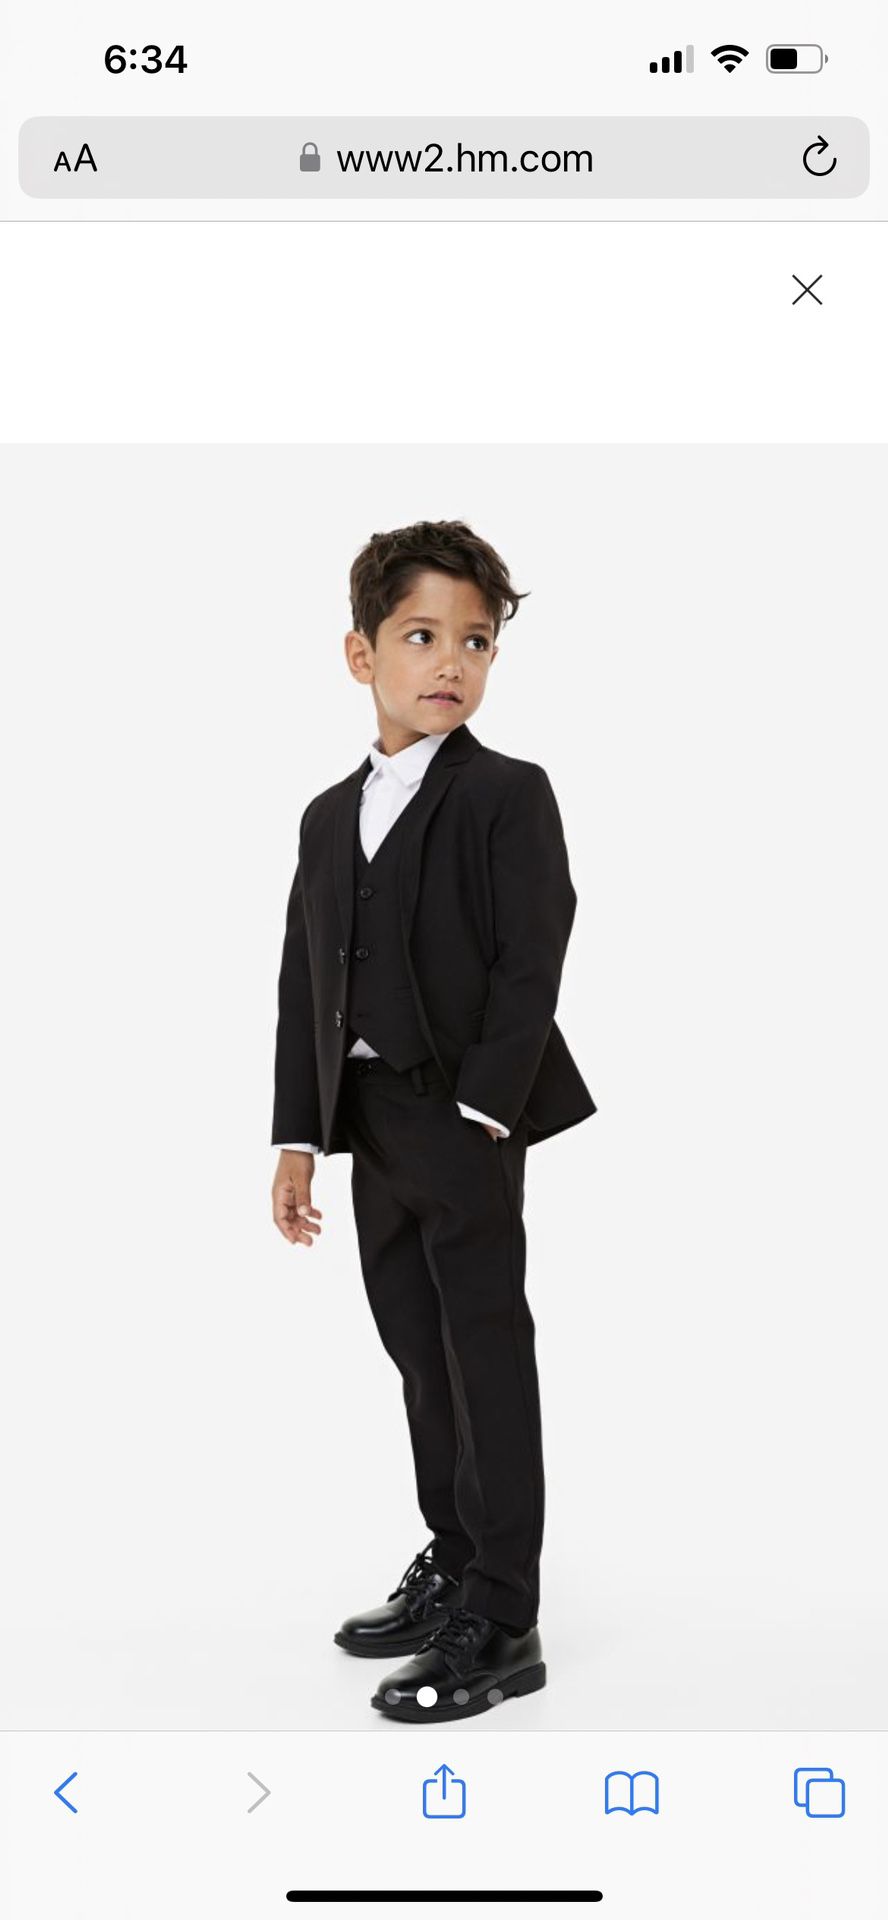 Toddler Black Suit 